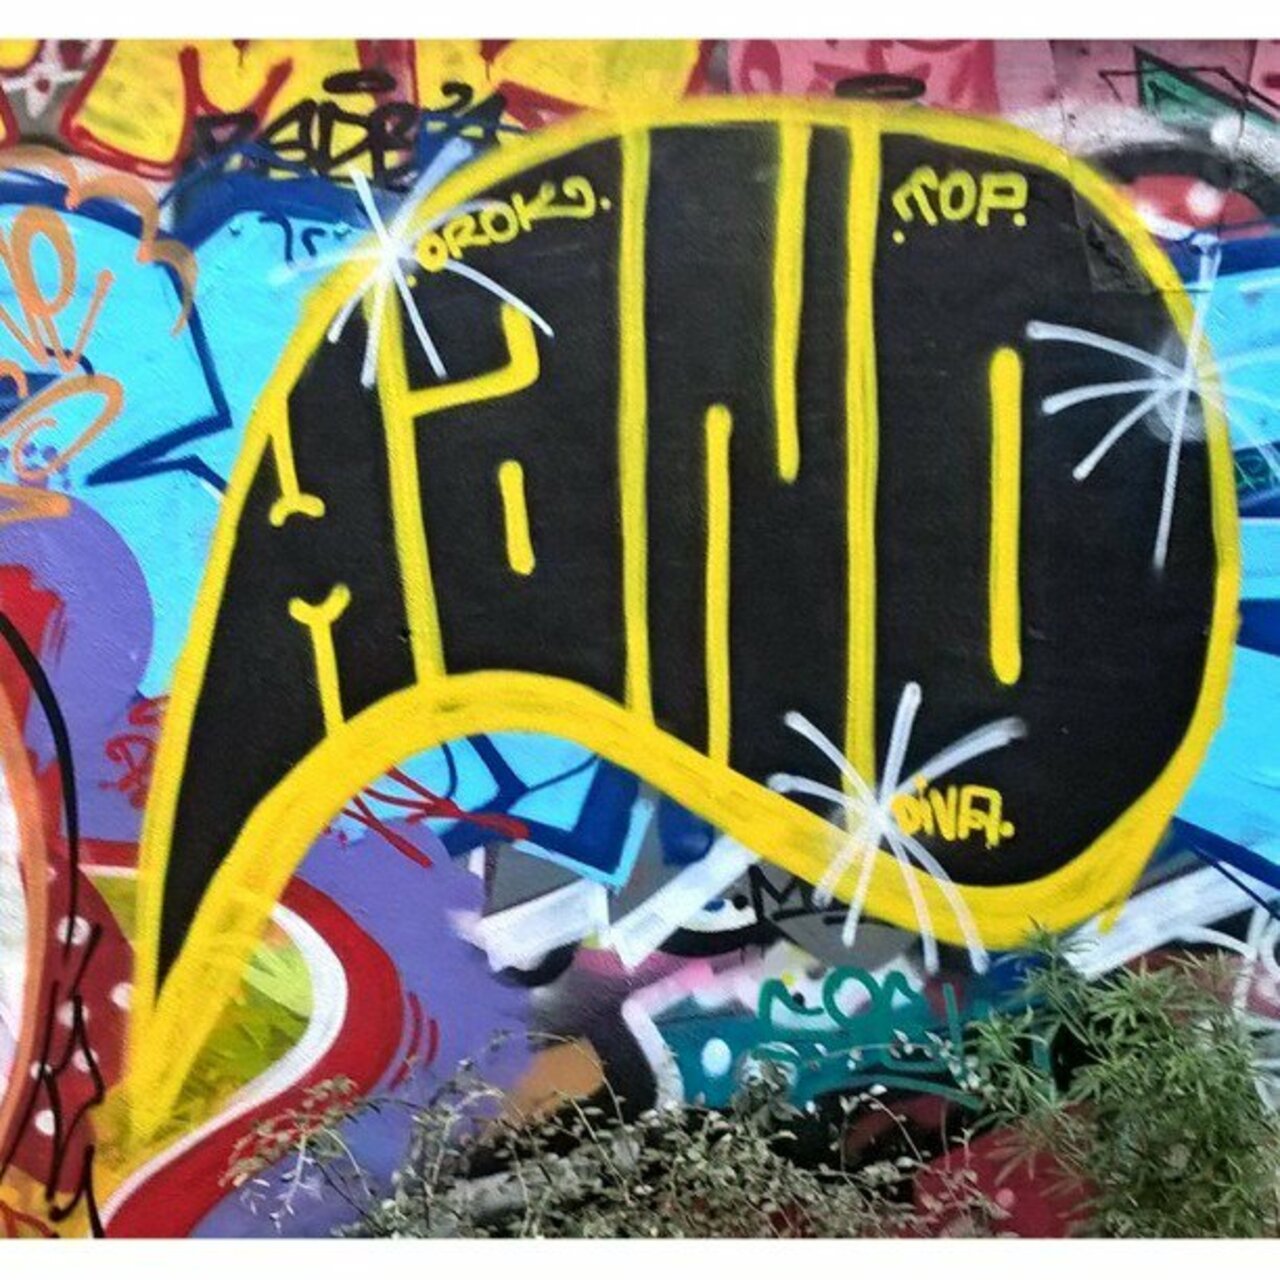 HANO
#streetart #graffiti #graff #art #fatcap #bombing #sprayart #spraycanart #wallart #handstyle #lettering #urban… https://t.co/BHsBA82x5q